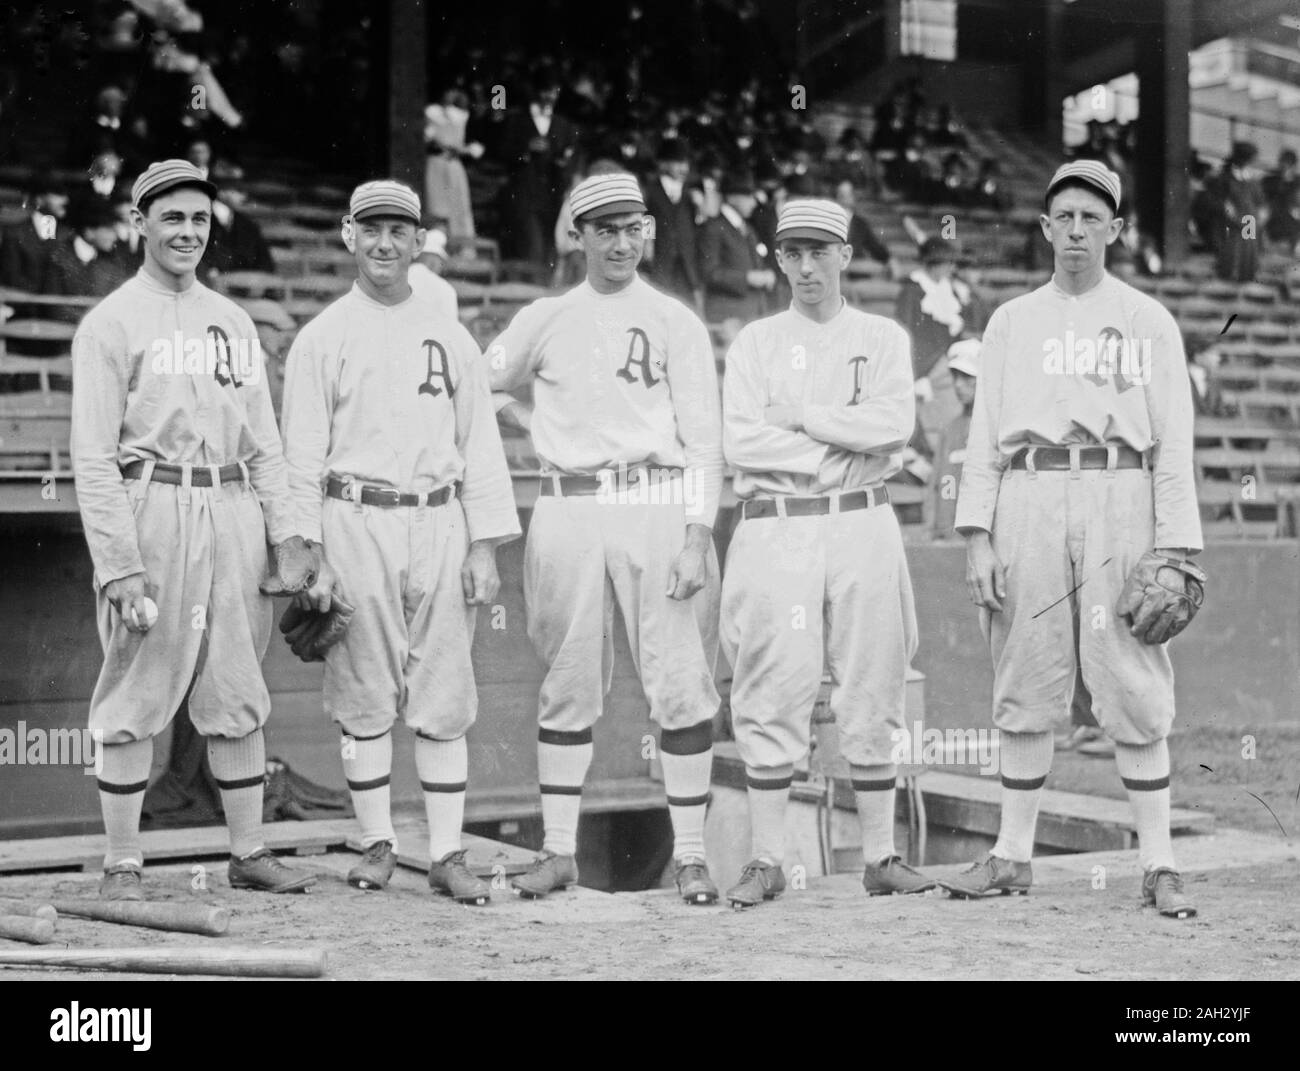 Stuffy McInnis, Eddie Murphy, Frank Baker, Jack Barry, Eddie Collins, Philadelphia AL ca. 1914 Stock Photo